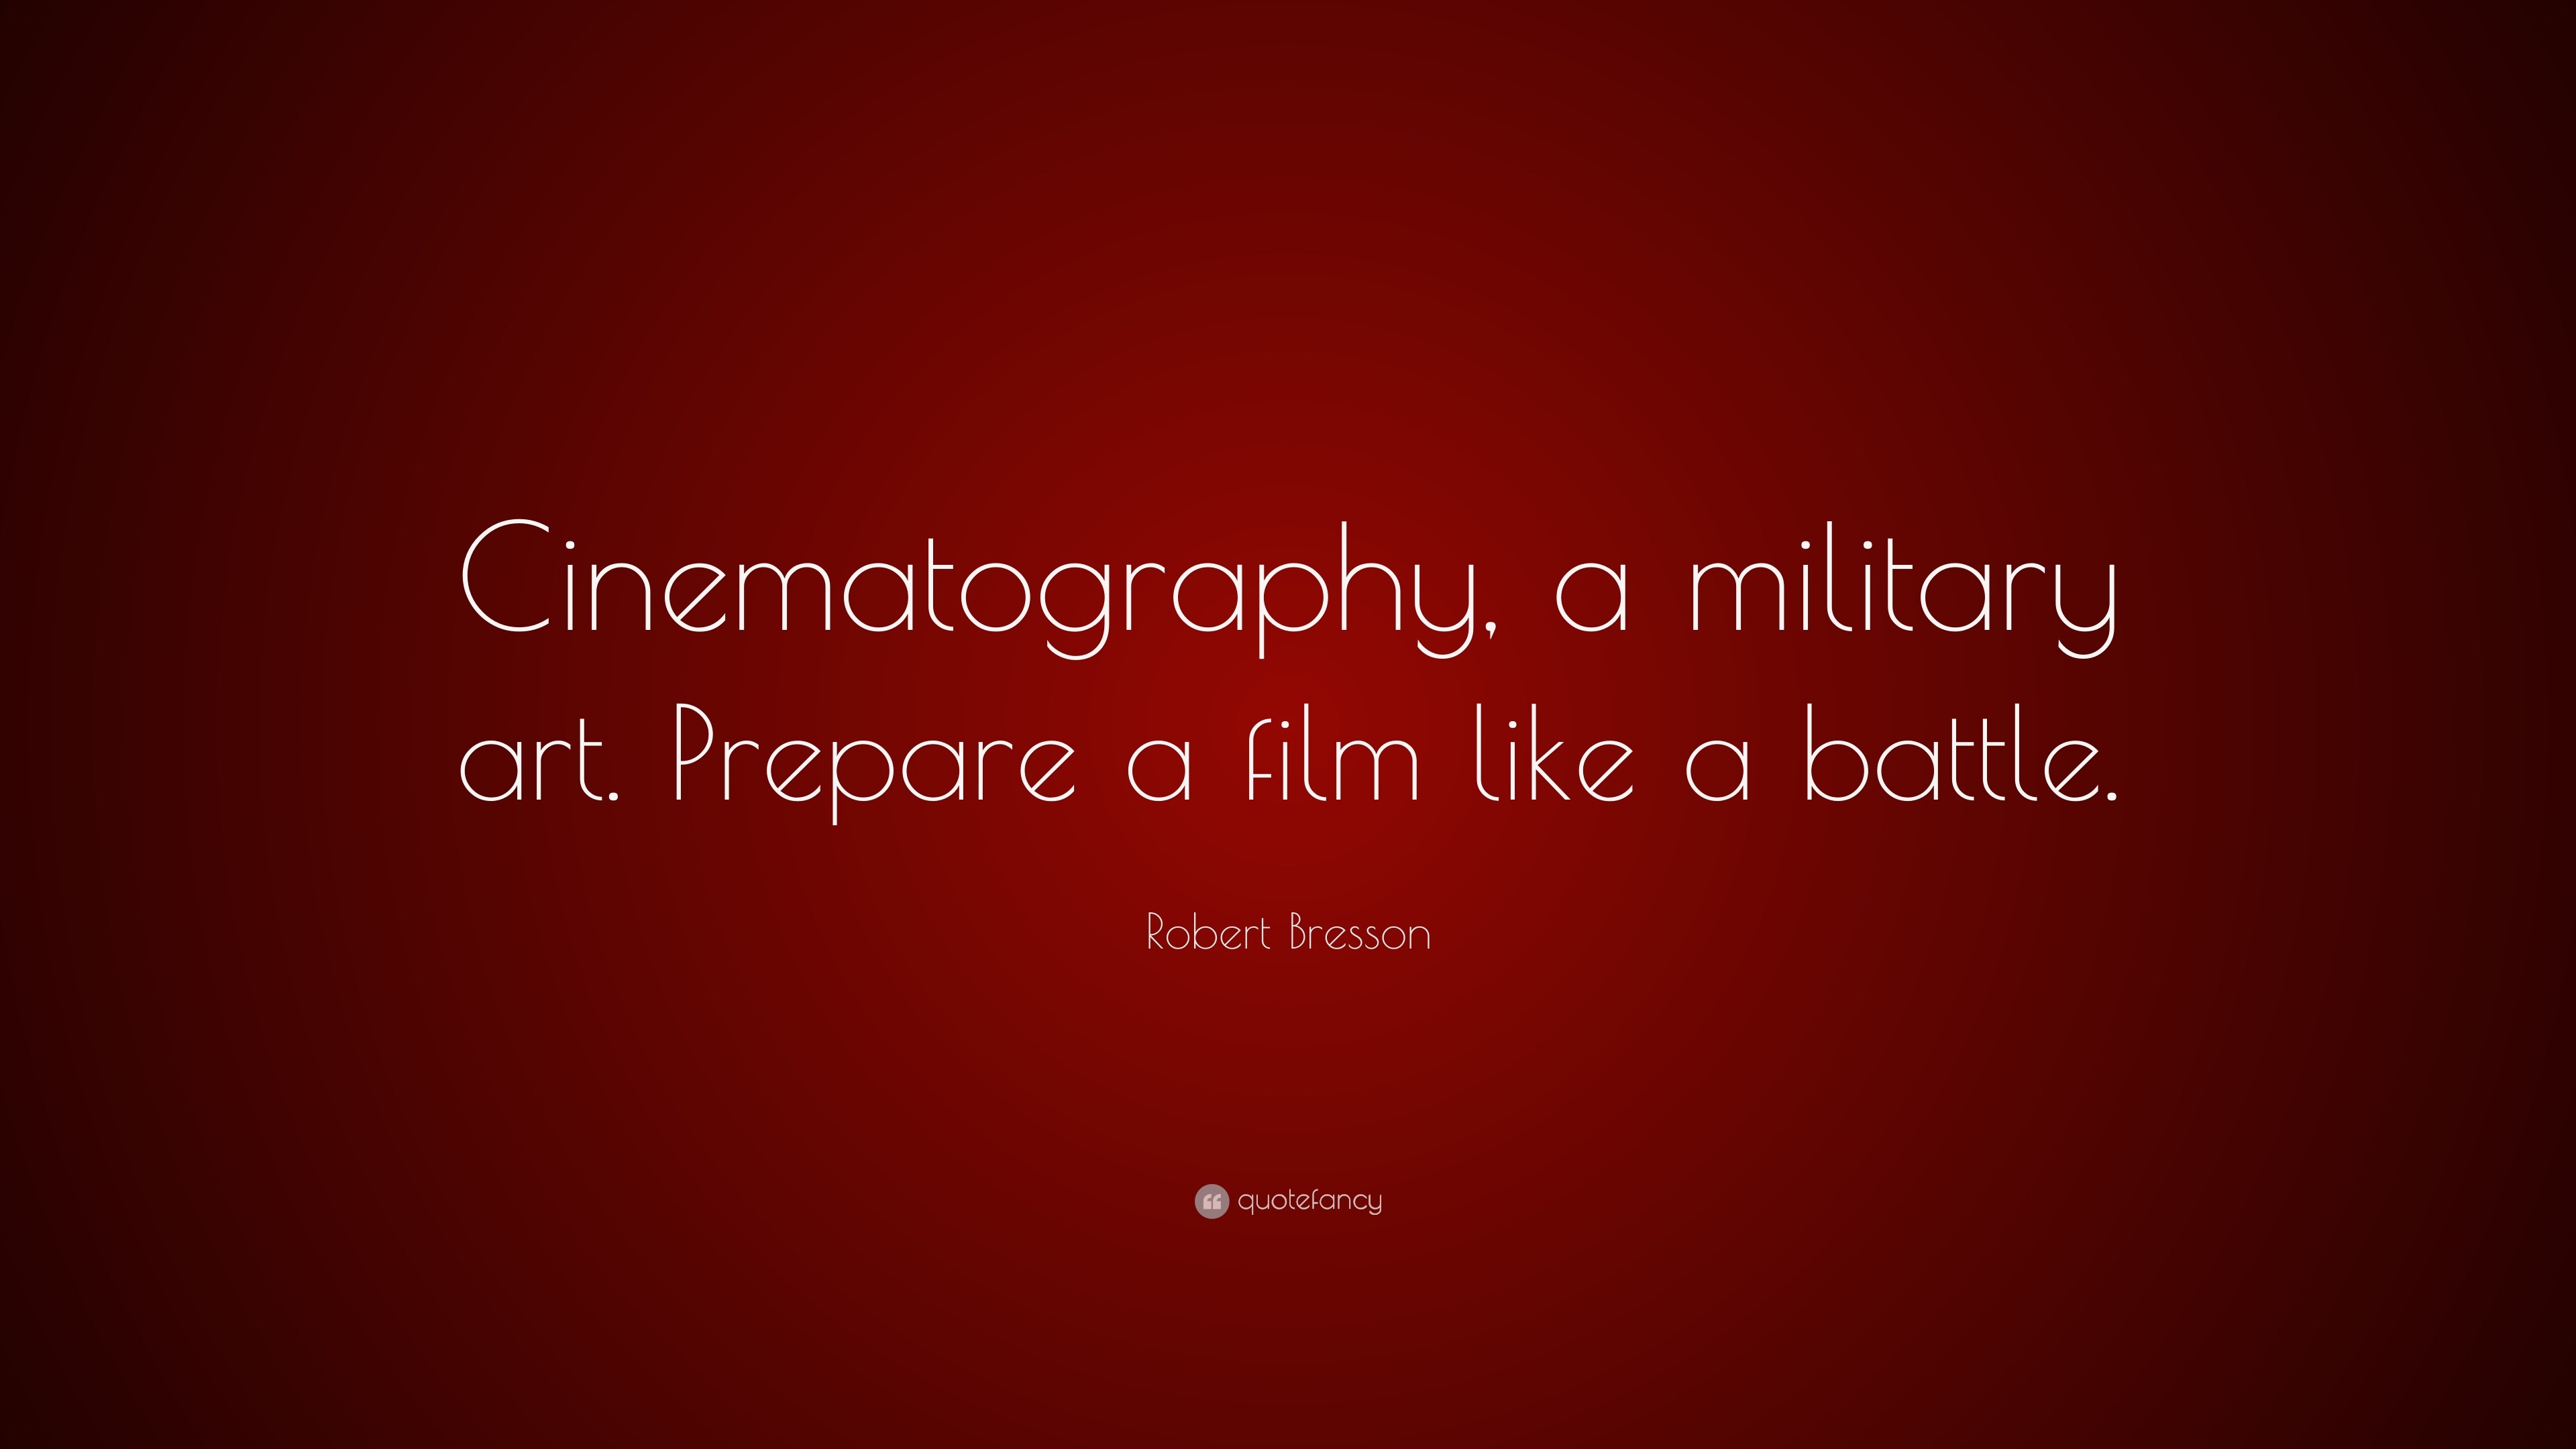 Cinematography quote bresson robert prepare military film quotes battle featured